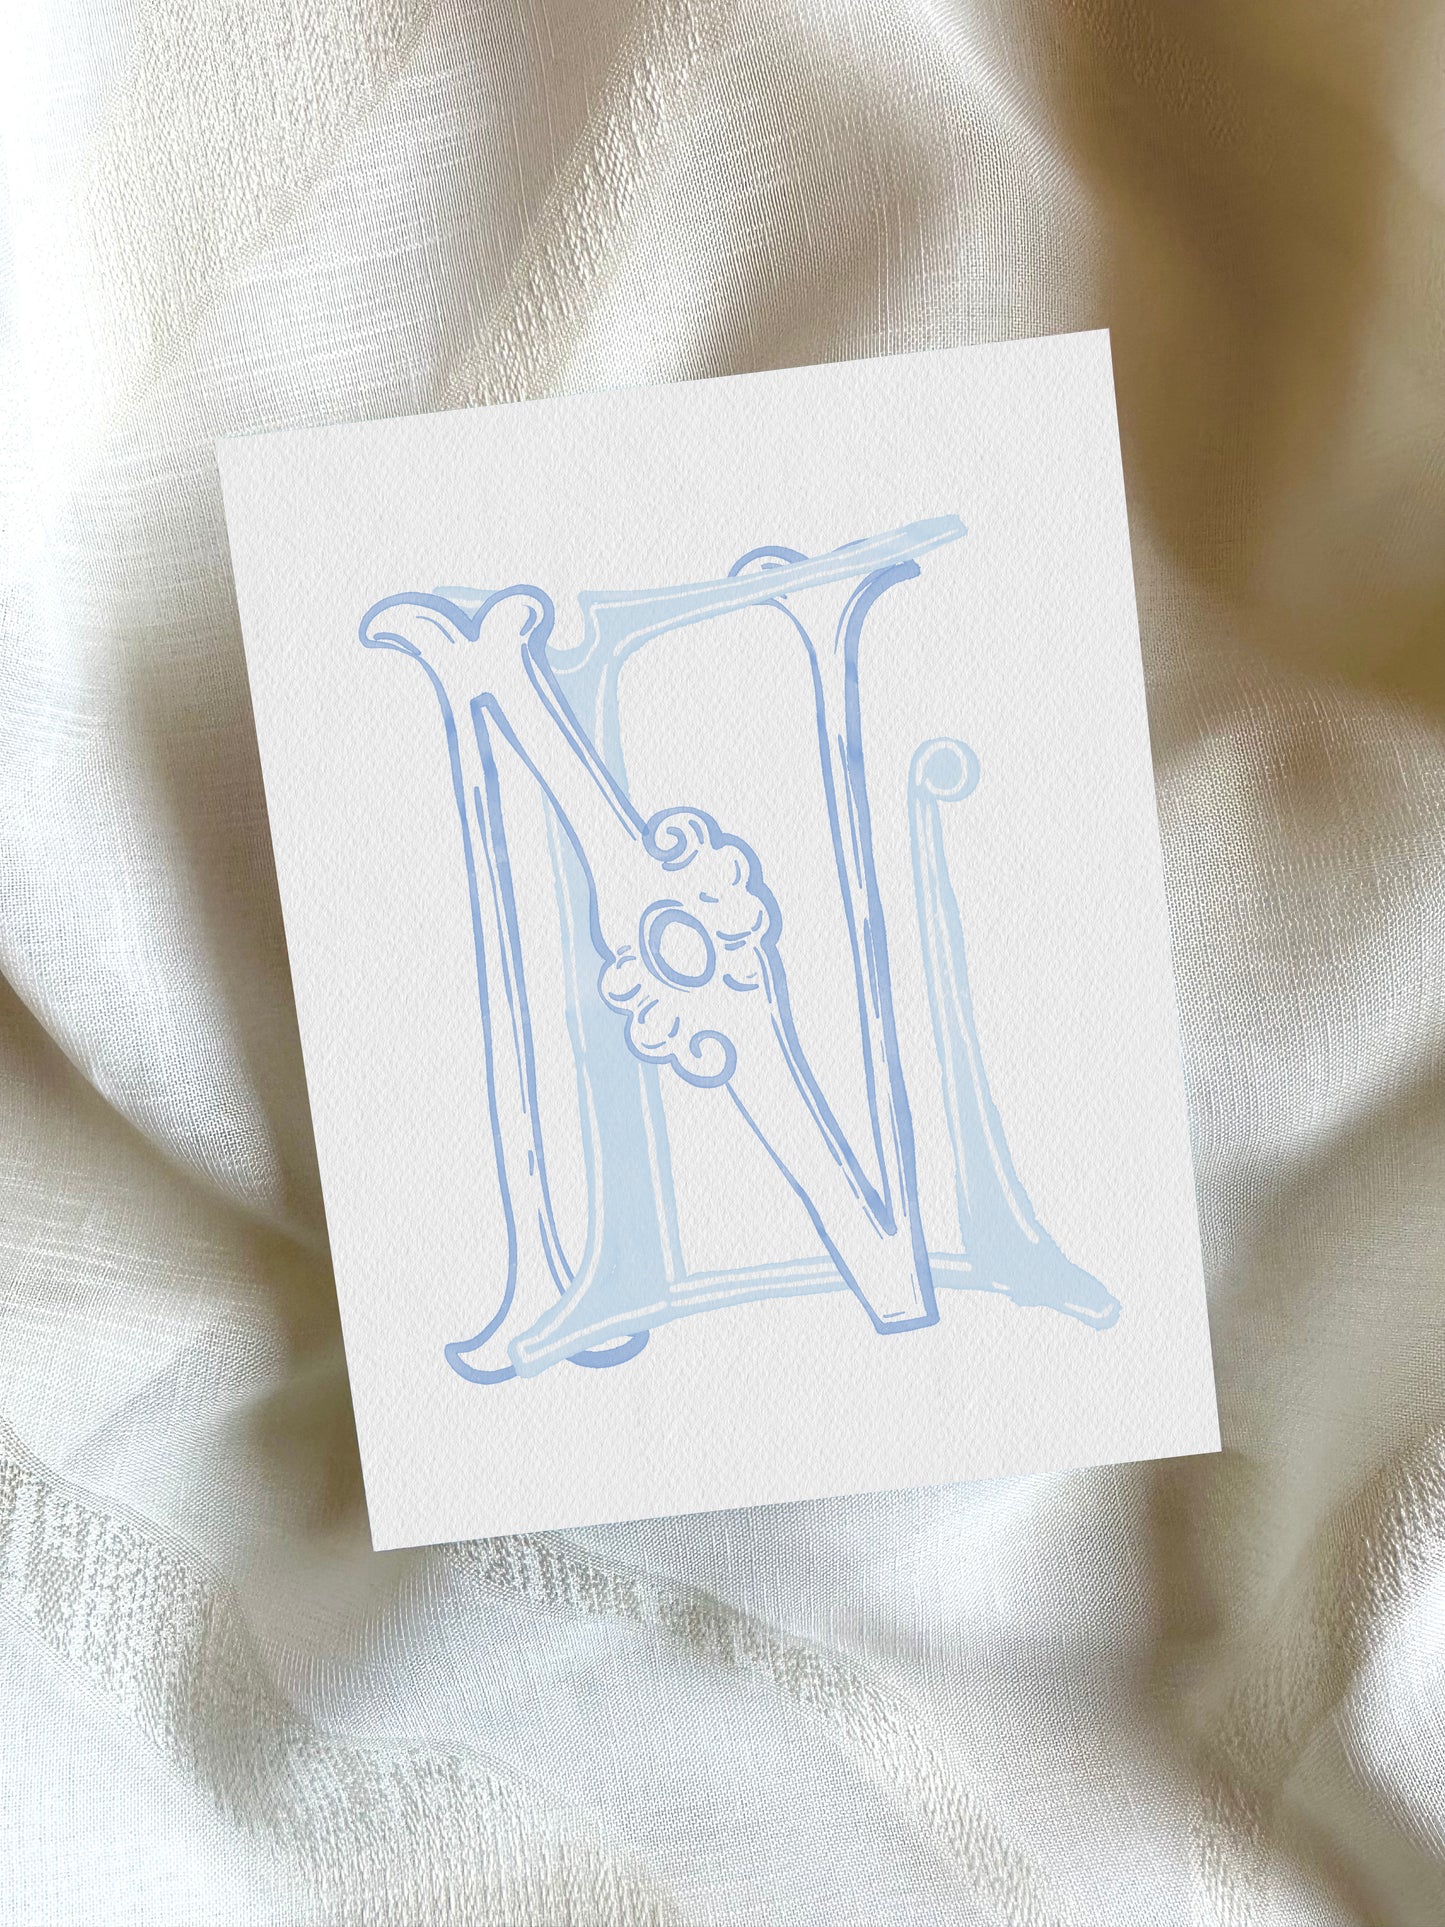 2 Letter Monogram with Letters LN NL | Digital Download - Wedding Monogram SVG, Personal Logo, Wedding Logo for Wedding Invitations The Wedding Crest Lab